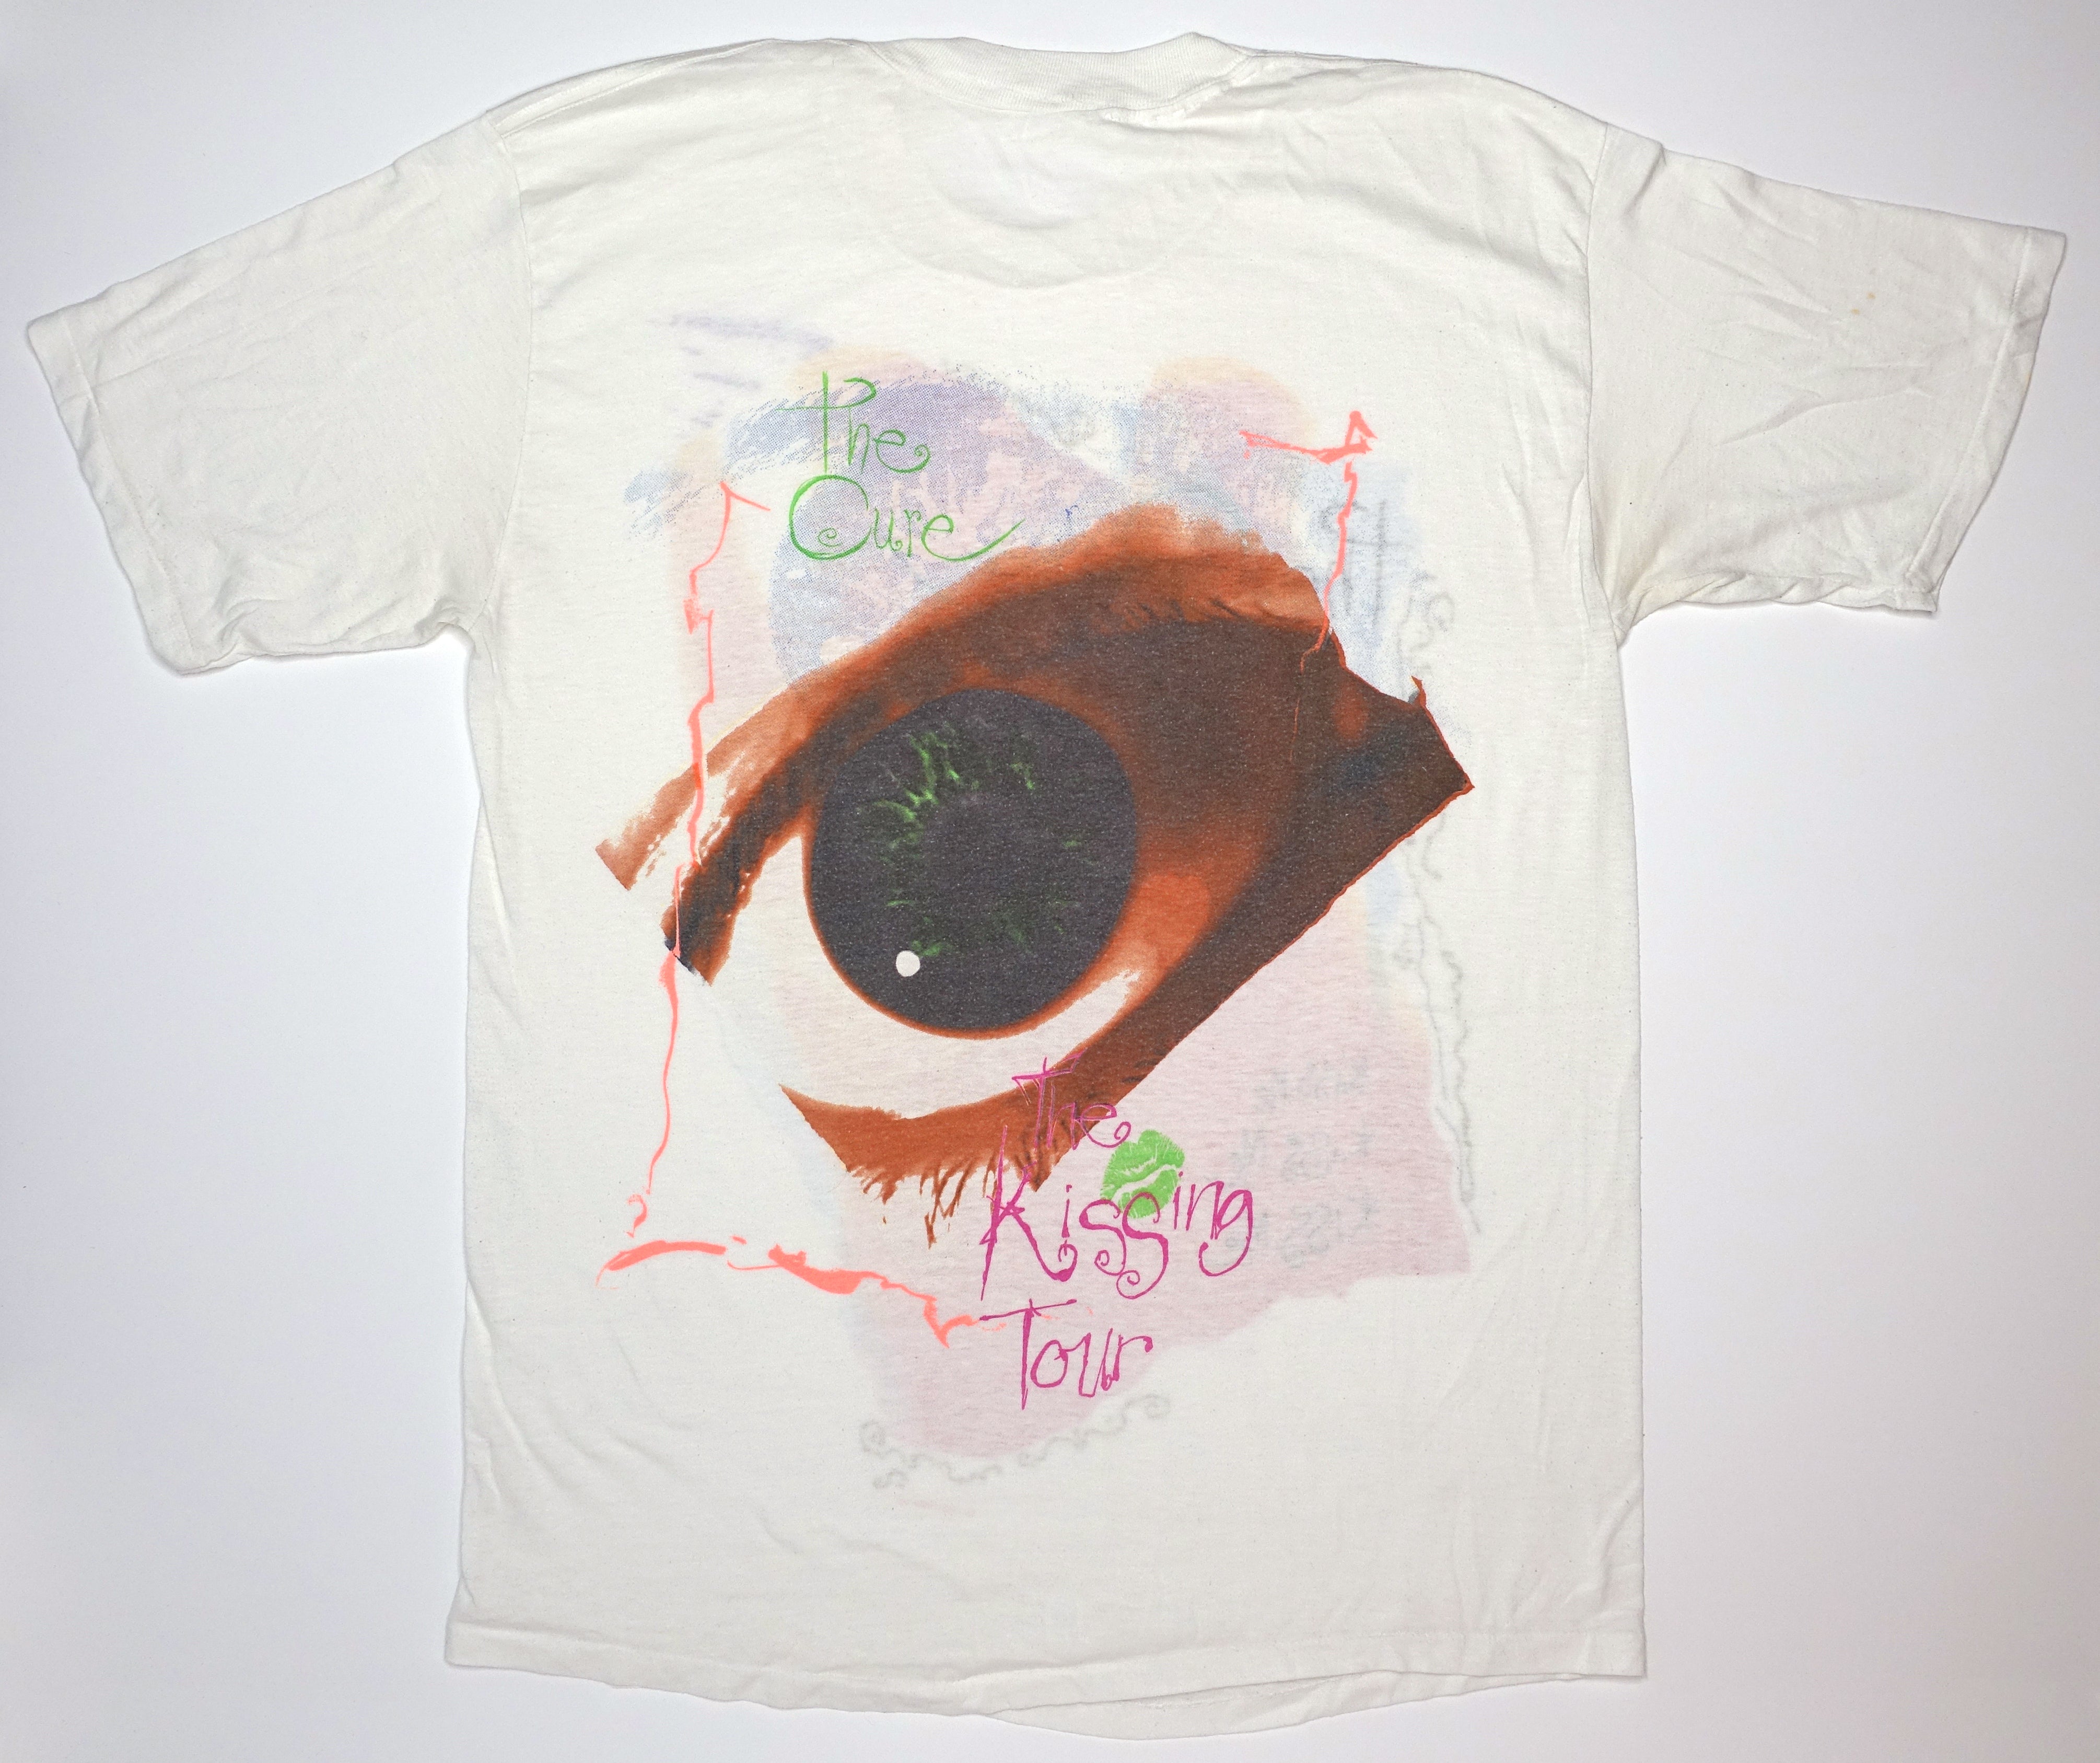 the Cure - Kiss Me, Kiss Me, Kiss Me 1987 Tour Shirt Size XL